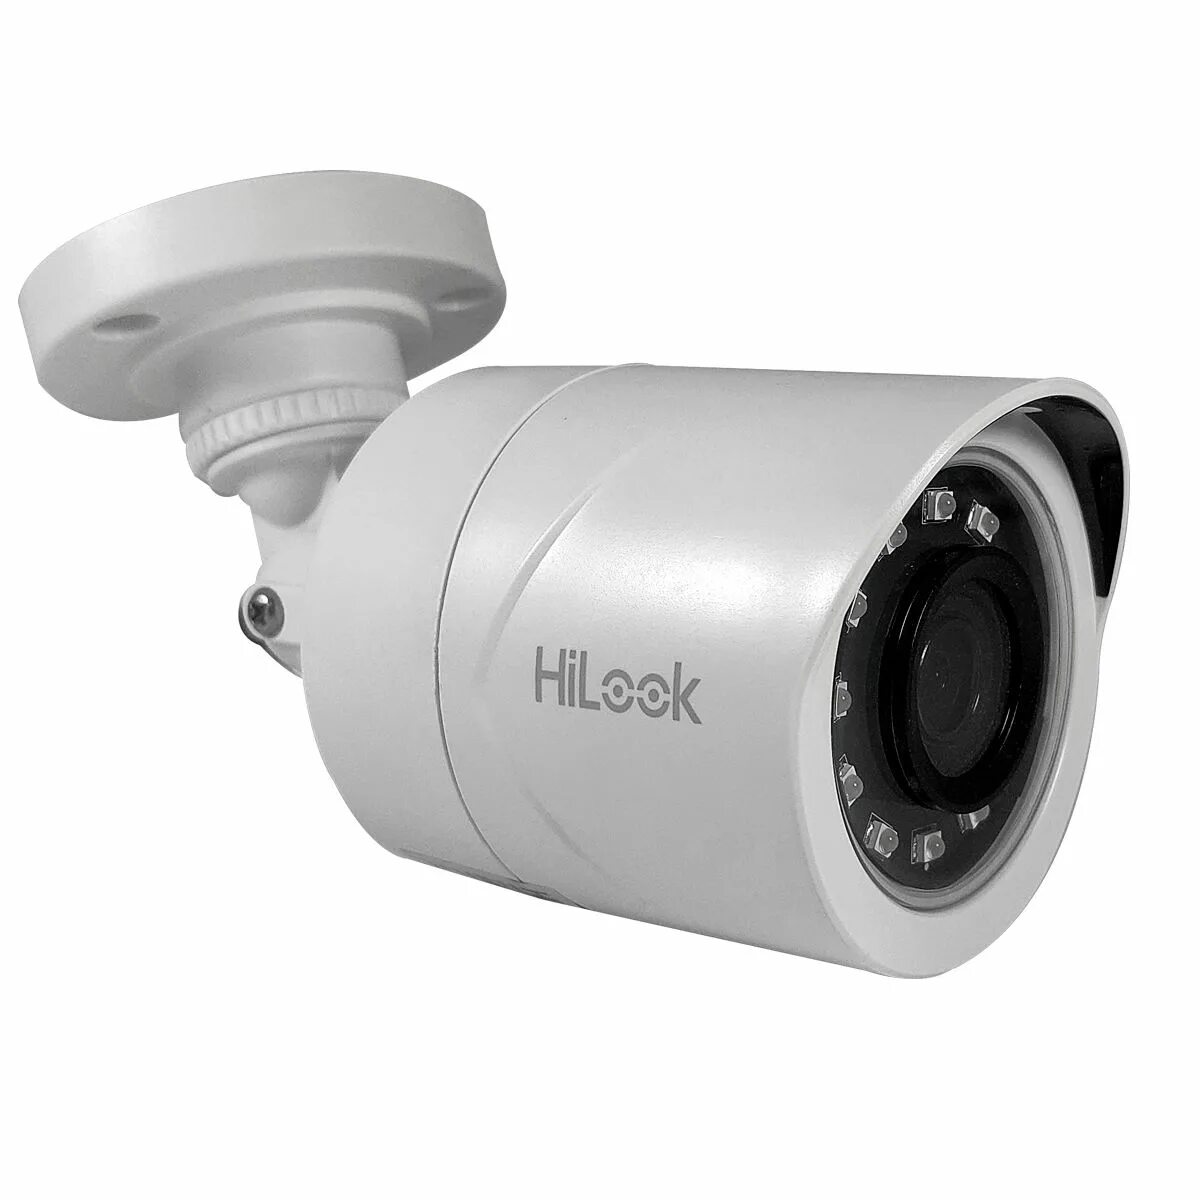 Ipc b040 2.8 mm. IPC-b020(b) (2.8mm). HILOOK IPC- b449h. Камера видеонаблюдения HILOOK THC-B 129. Камера HD cam by-ipc060-4/POE 4 MP 2.8mm.